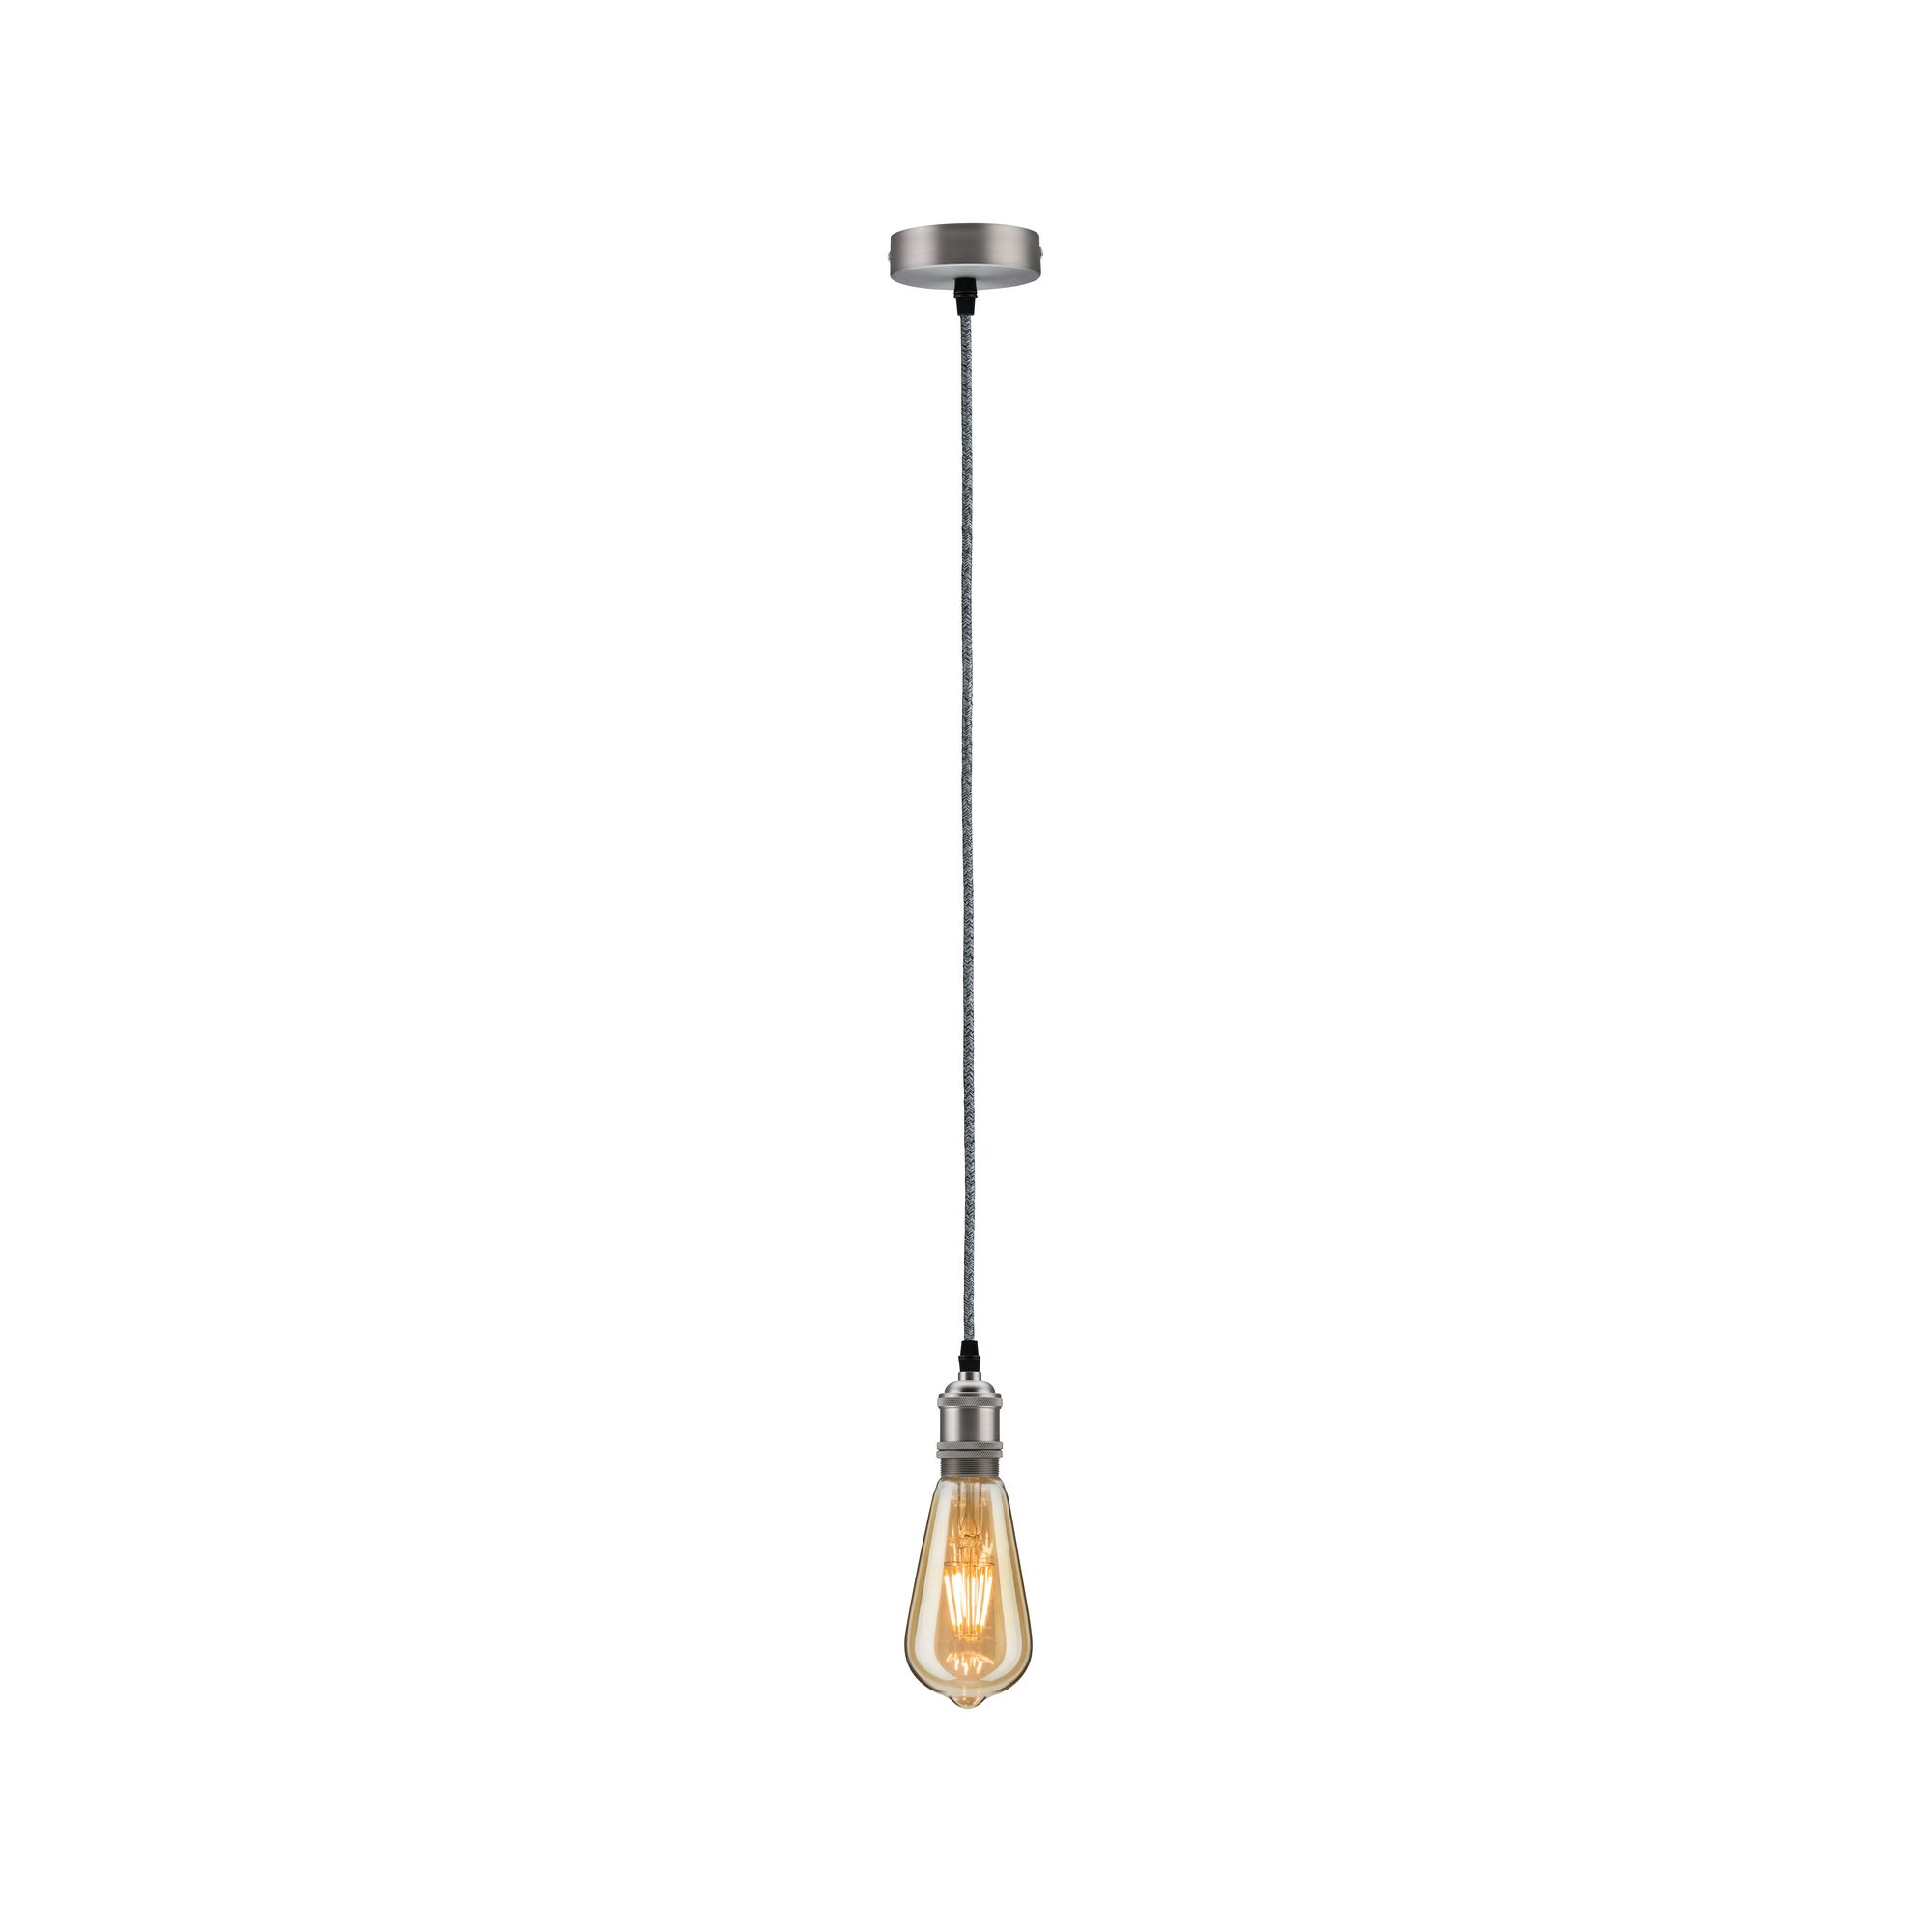 LED-Kolbenlampe ST64 E27 6,5W (53W) 680 lm warmgold klar + product picture